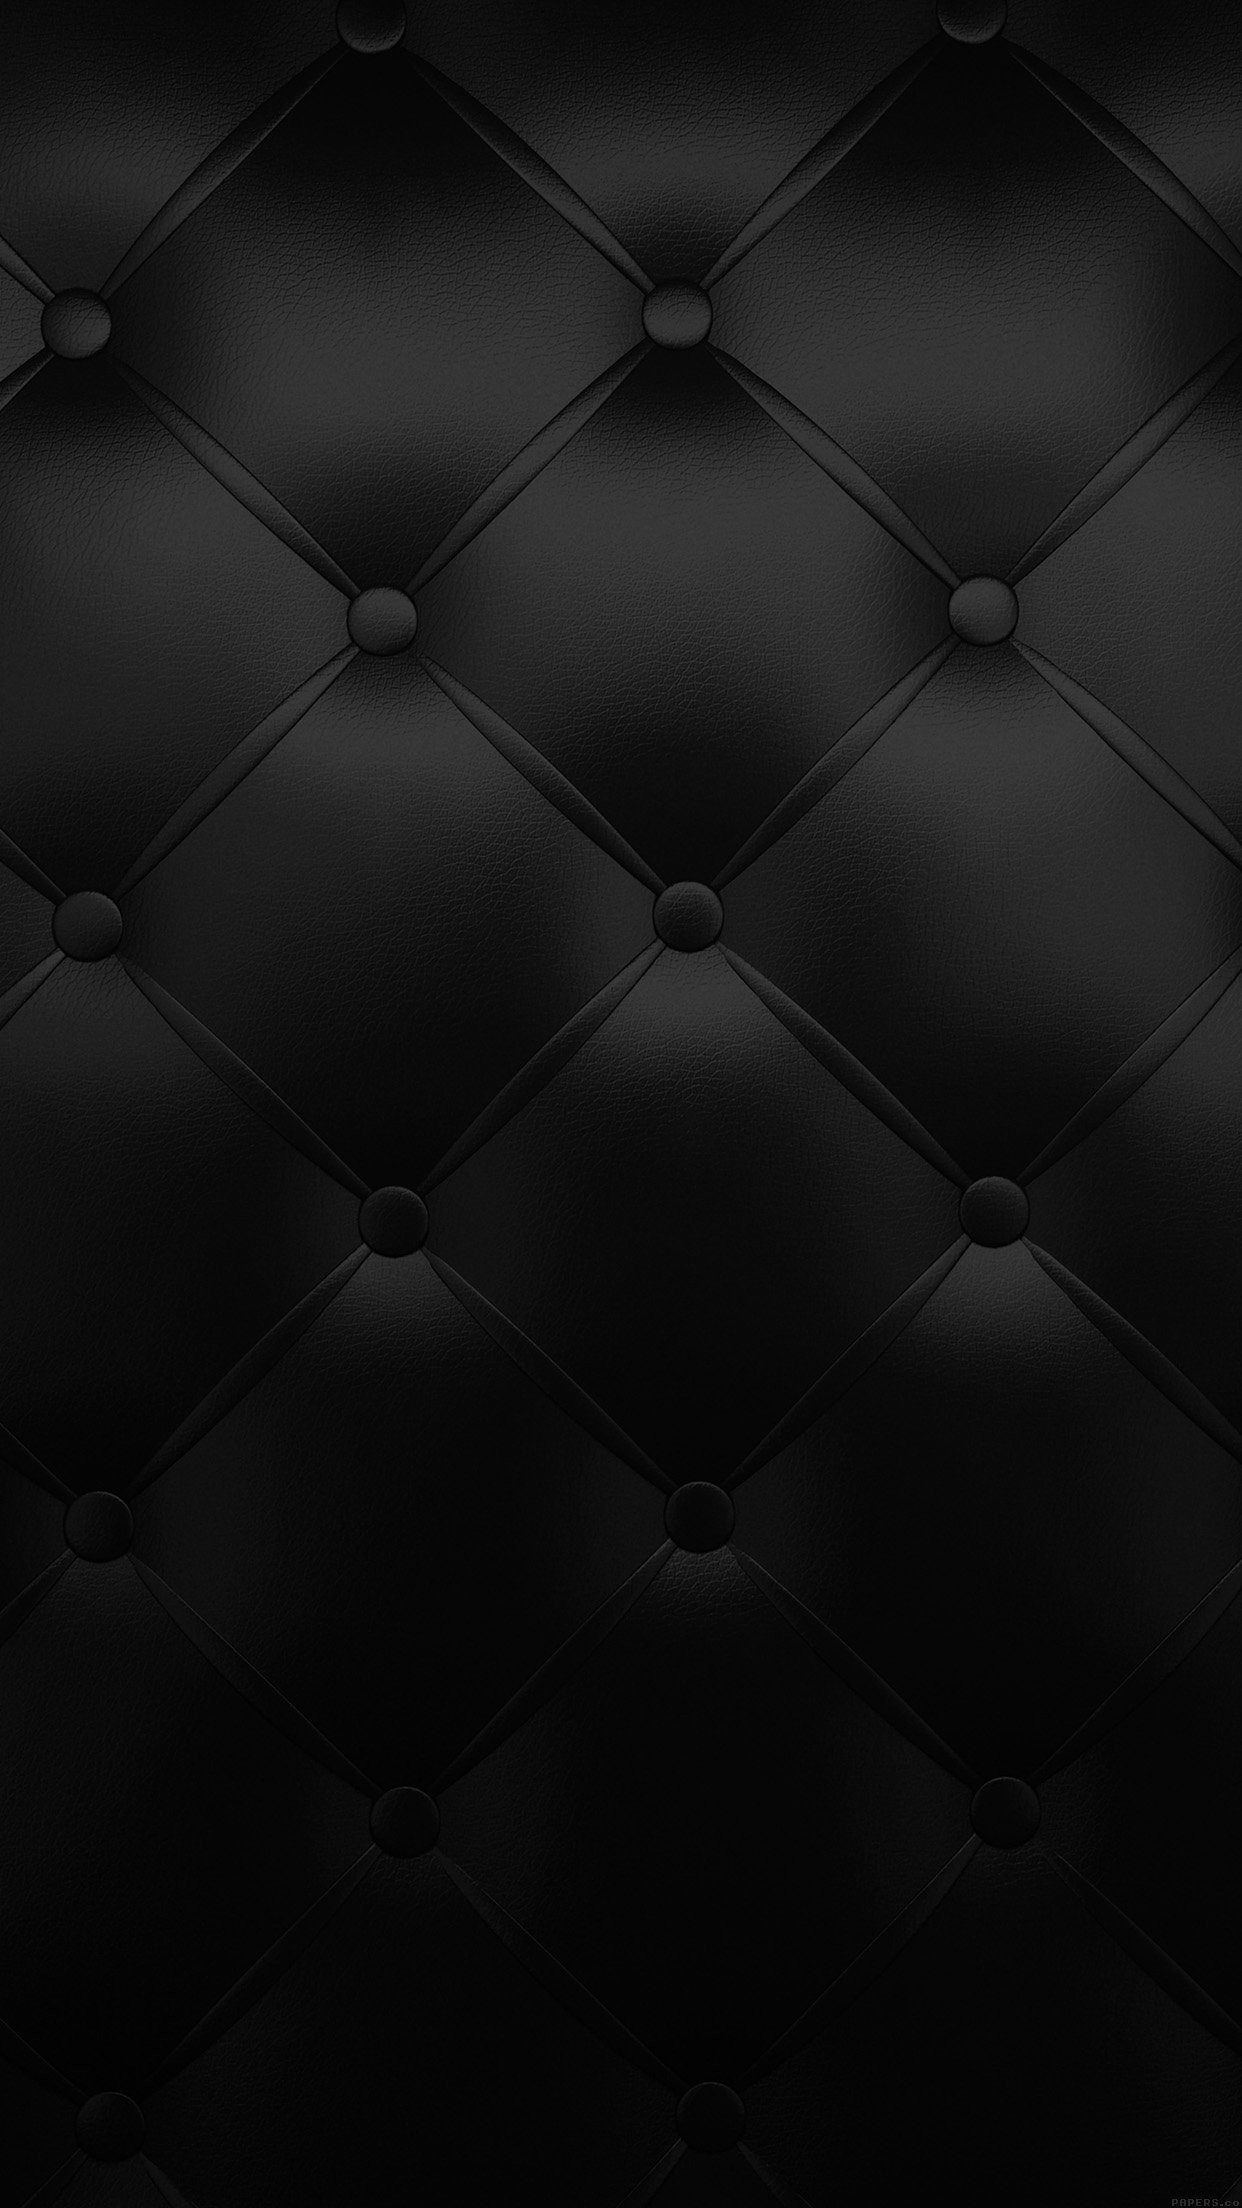 30k Black Iphone Wallpaper Pictures  Download Free Images on Unsplash